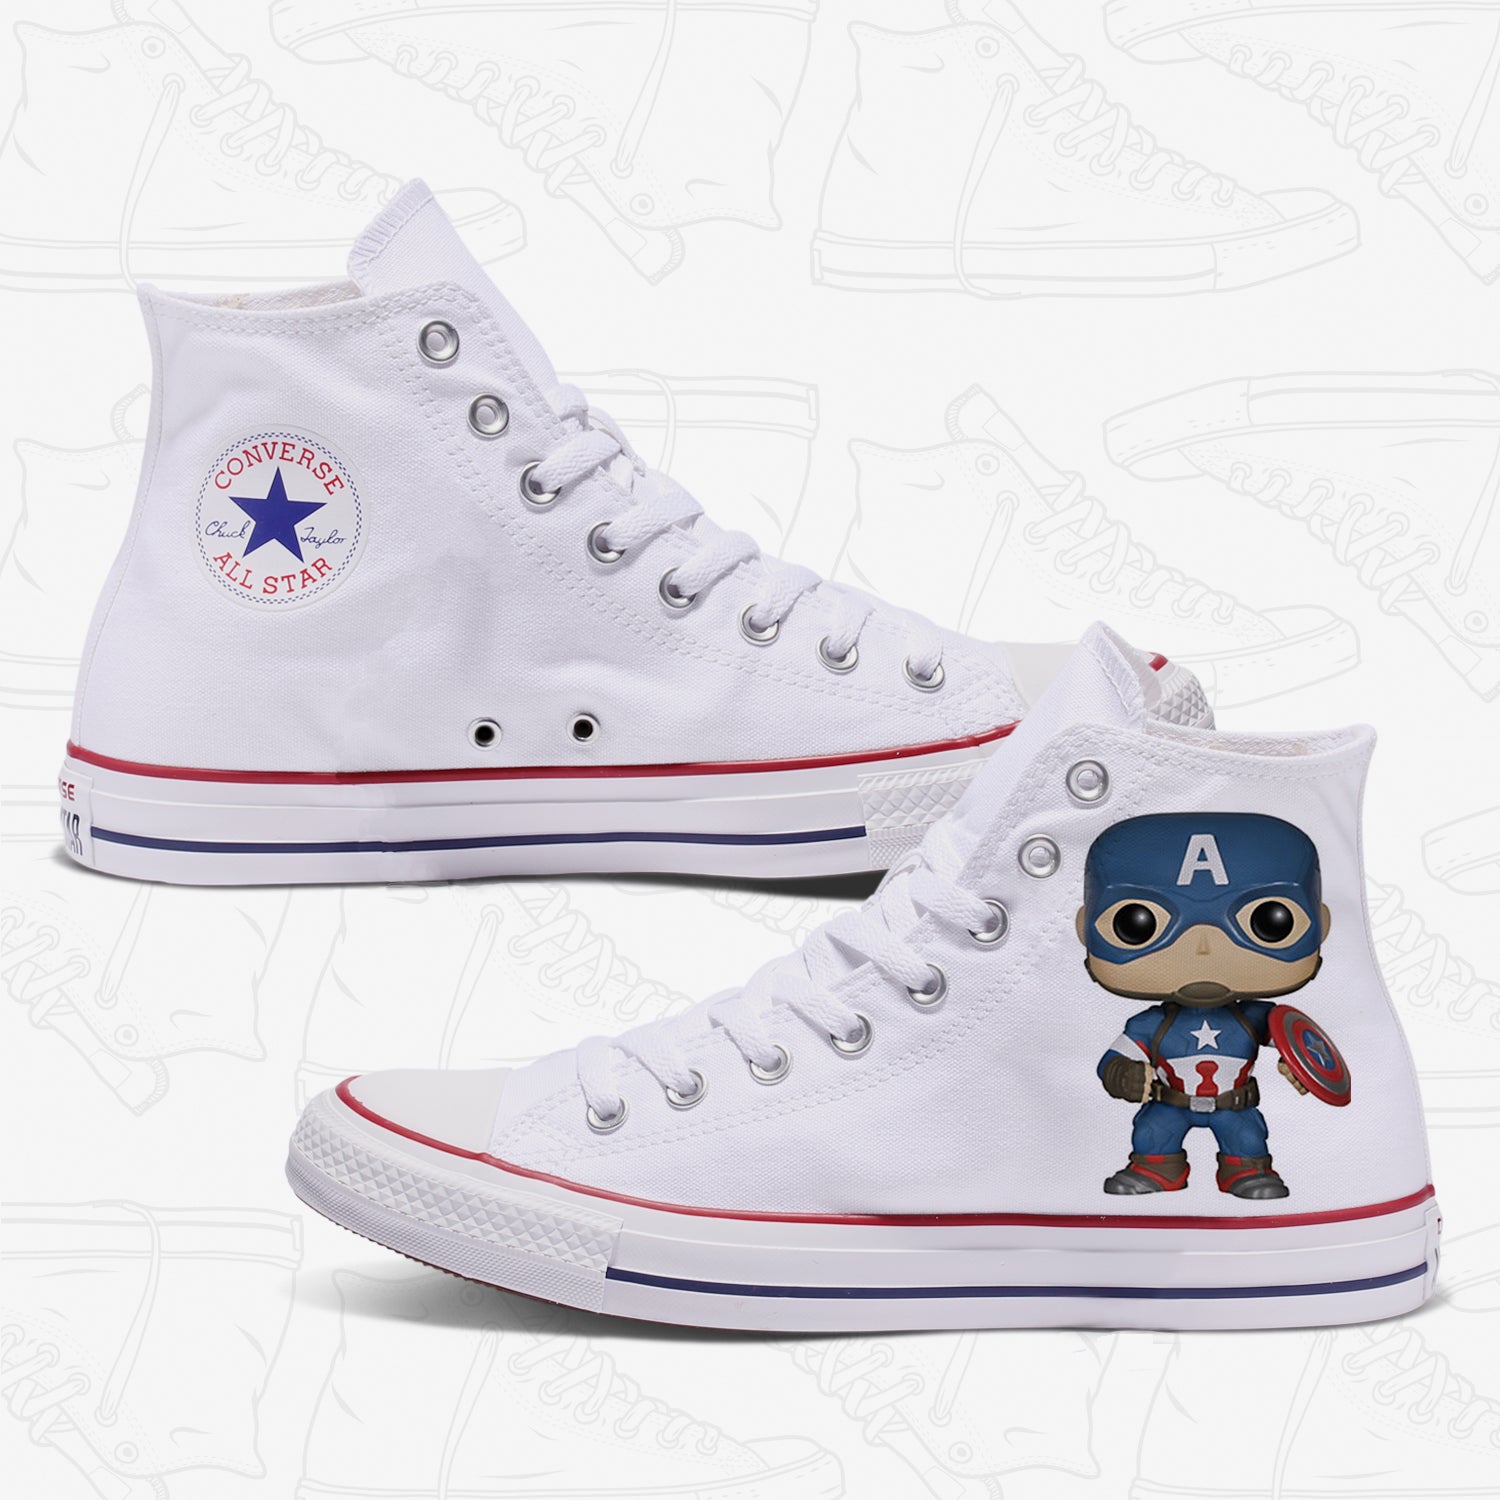 Captain America Adult Converse Shoes